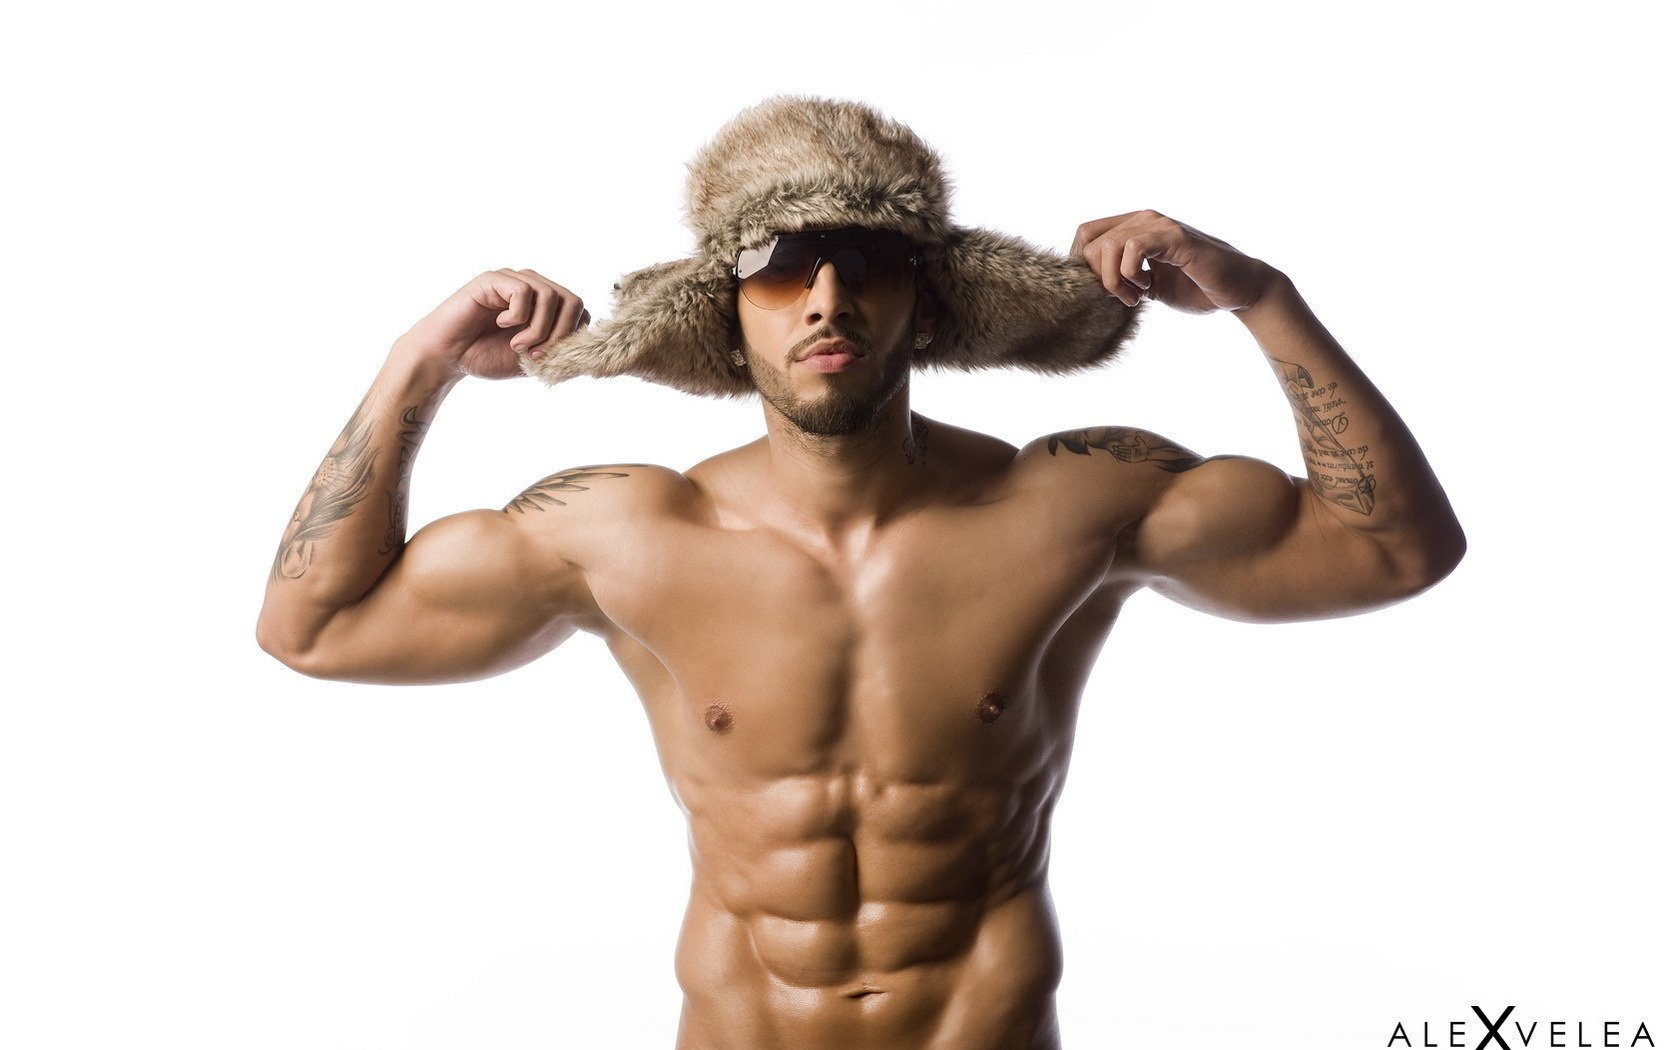 A beefy man in a fur hat